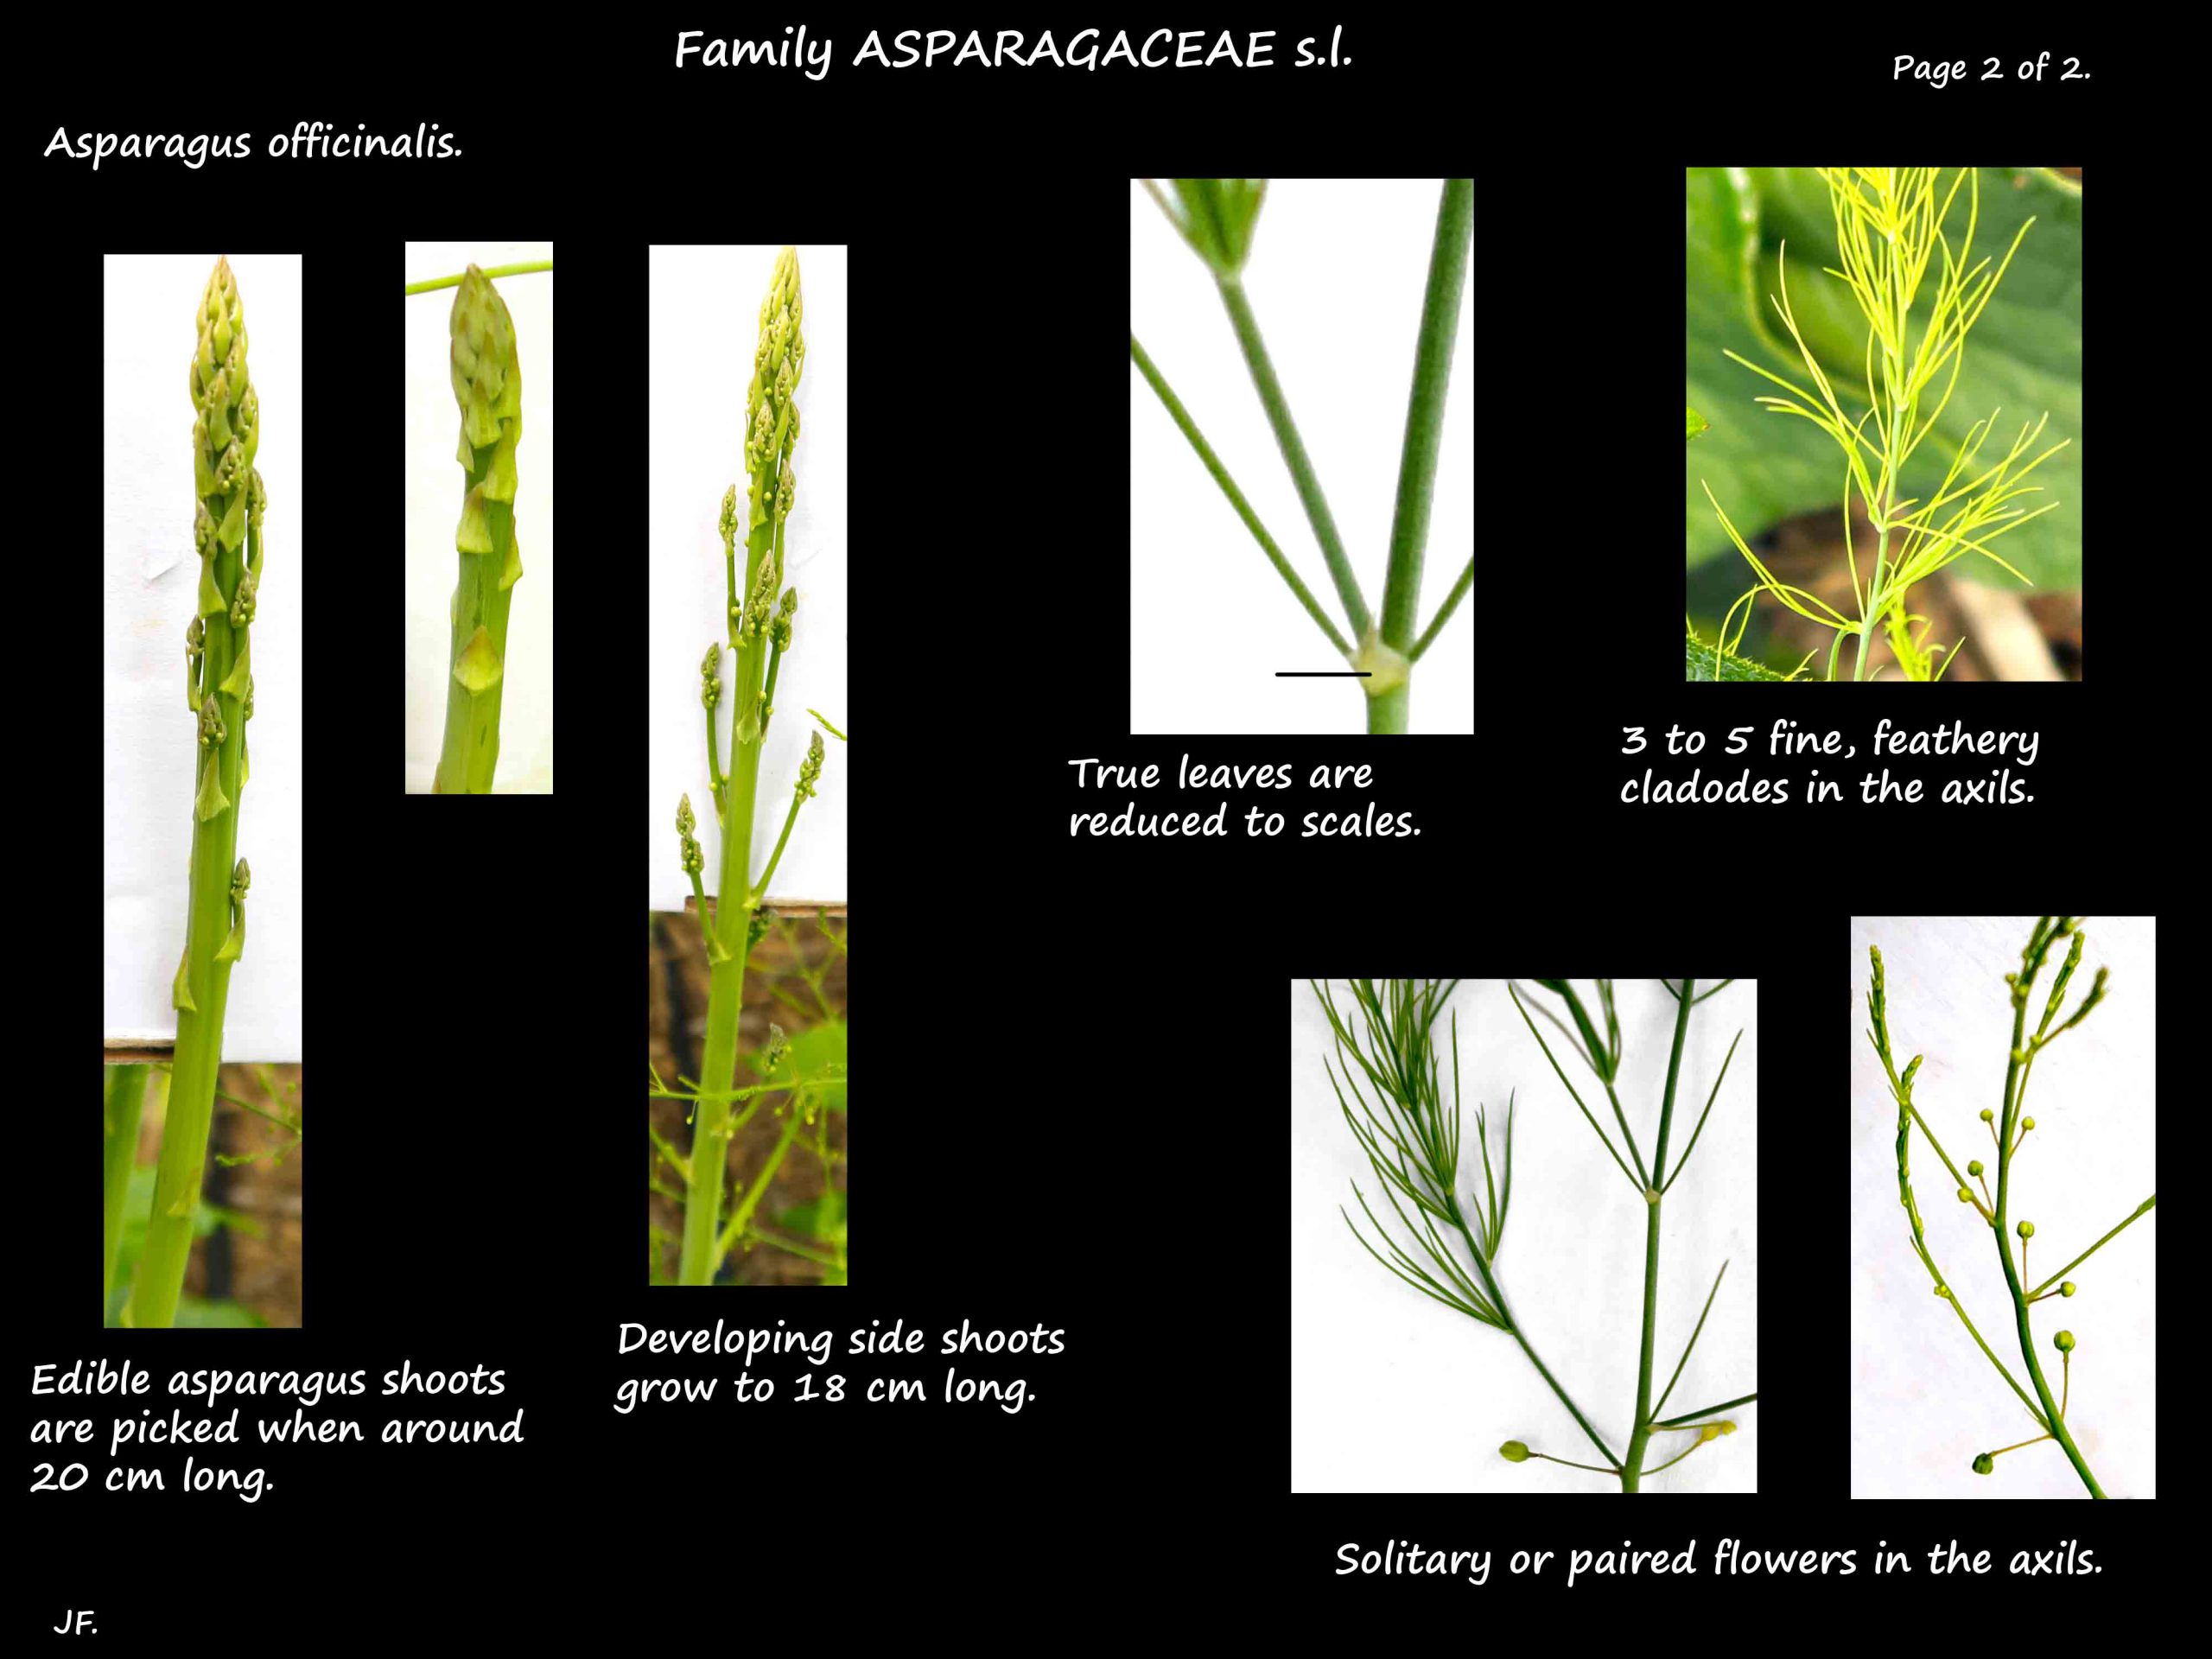 2 Asparagus officinalis leaves